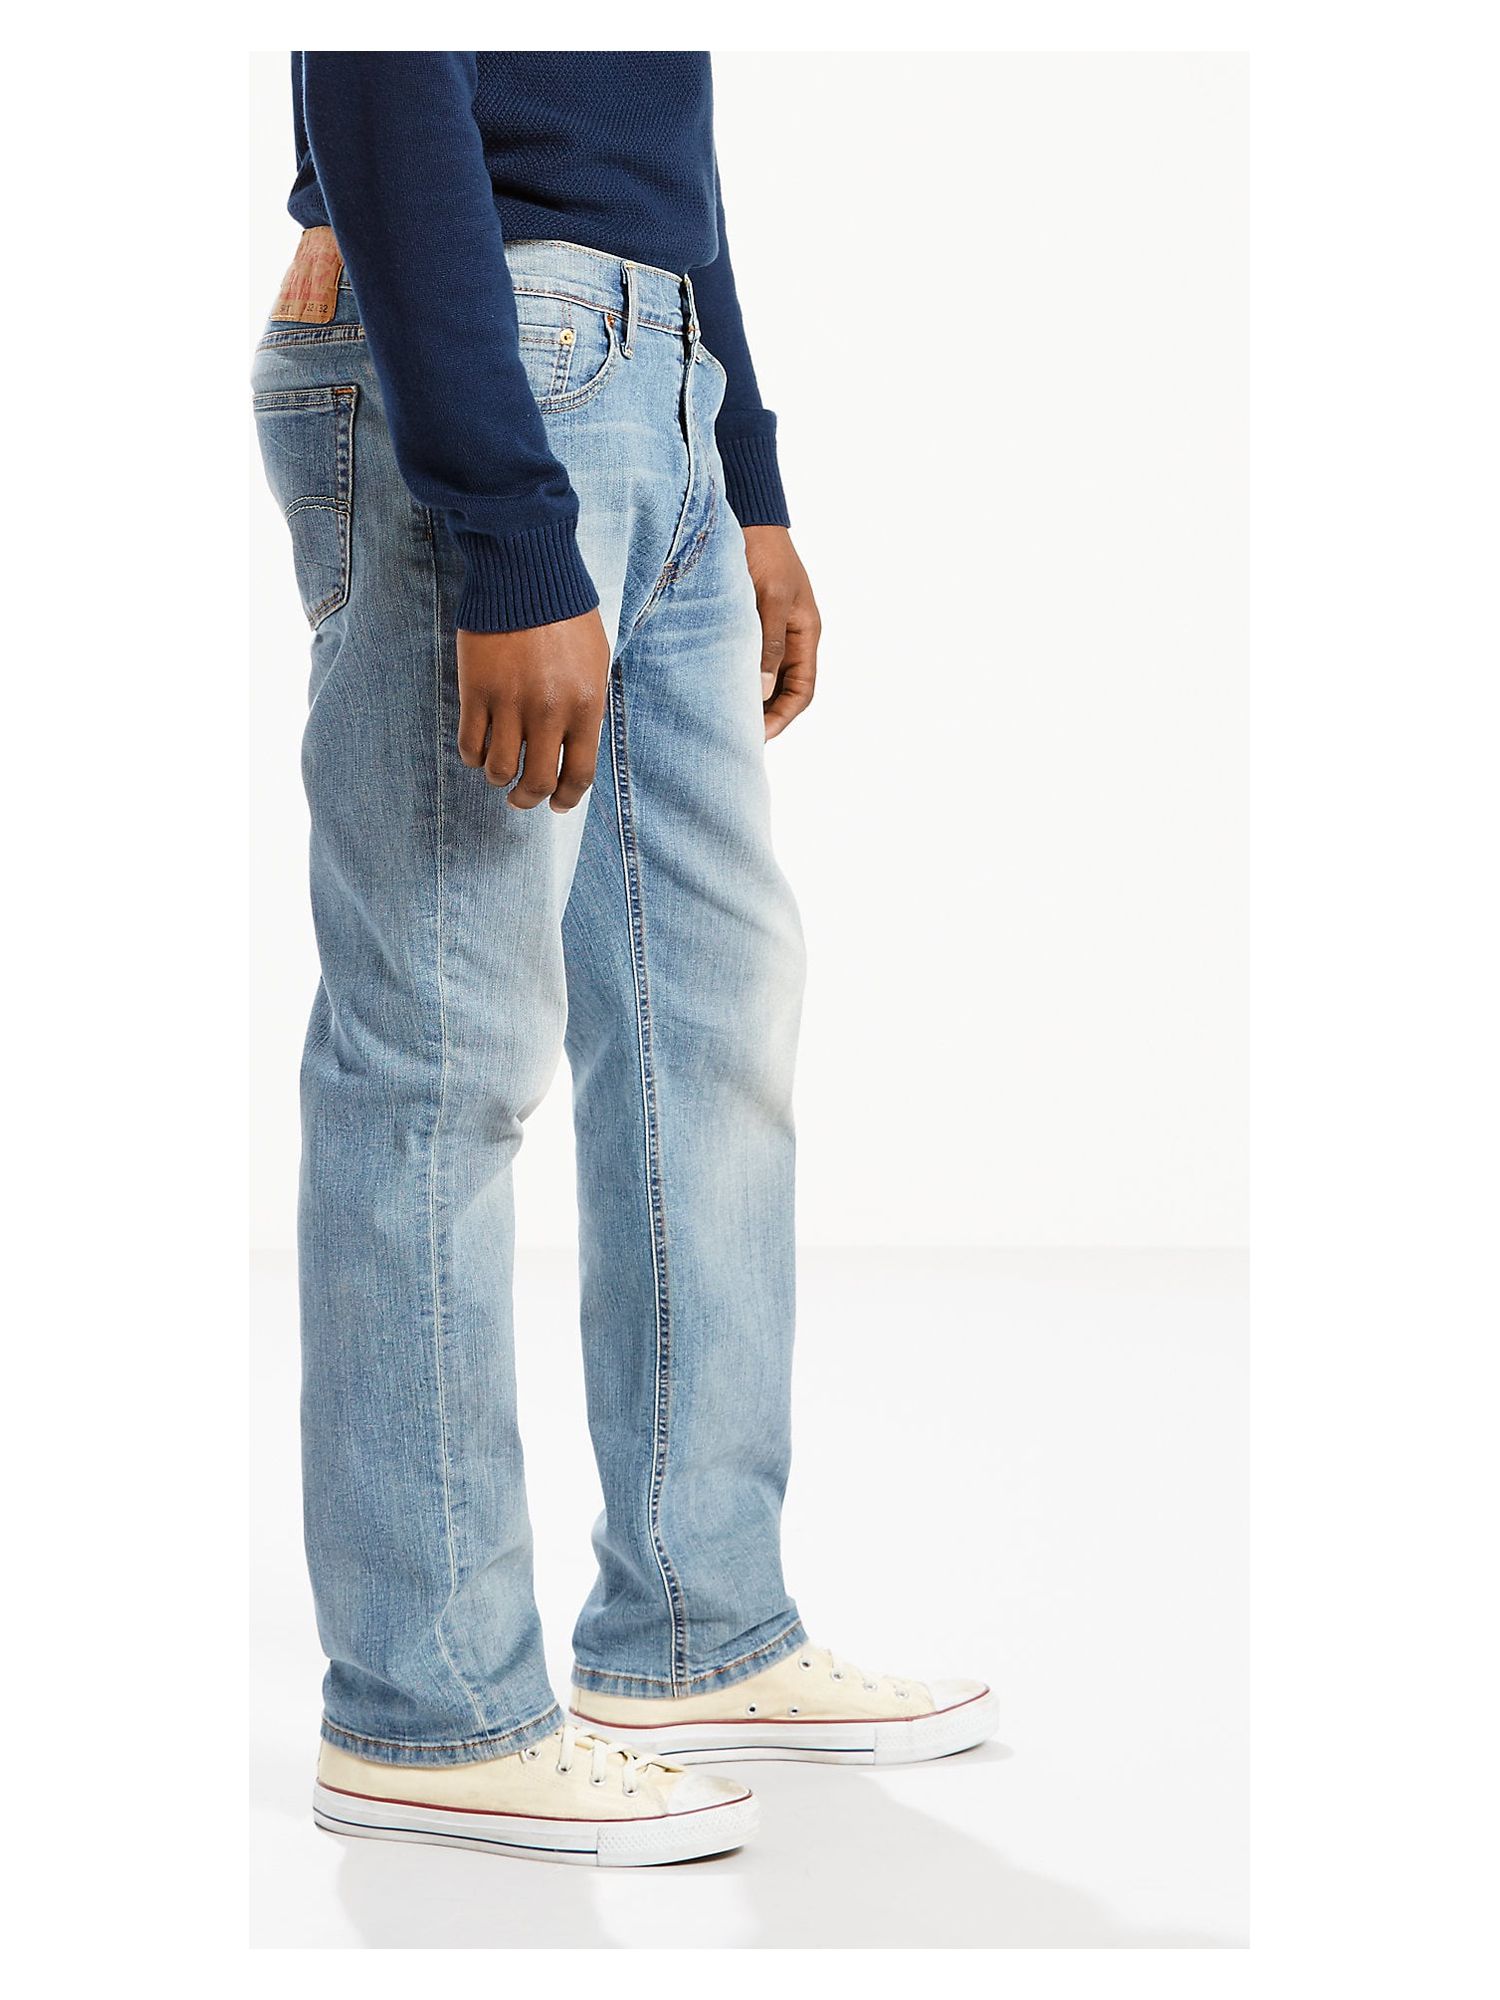 Levi's® Men's 541™ Athletic Fit Jeans - image 4 of 8